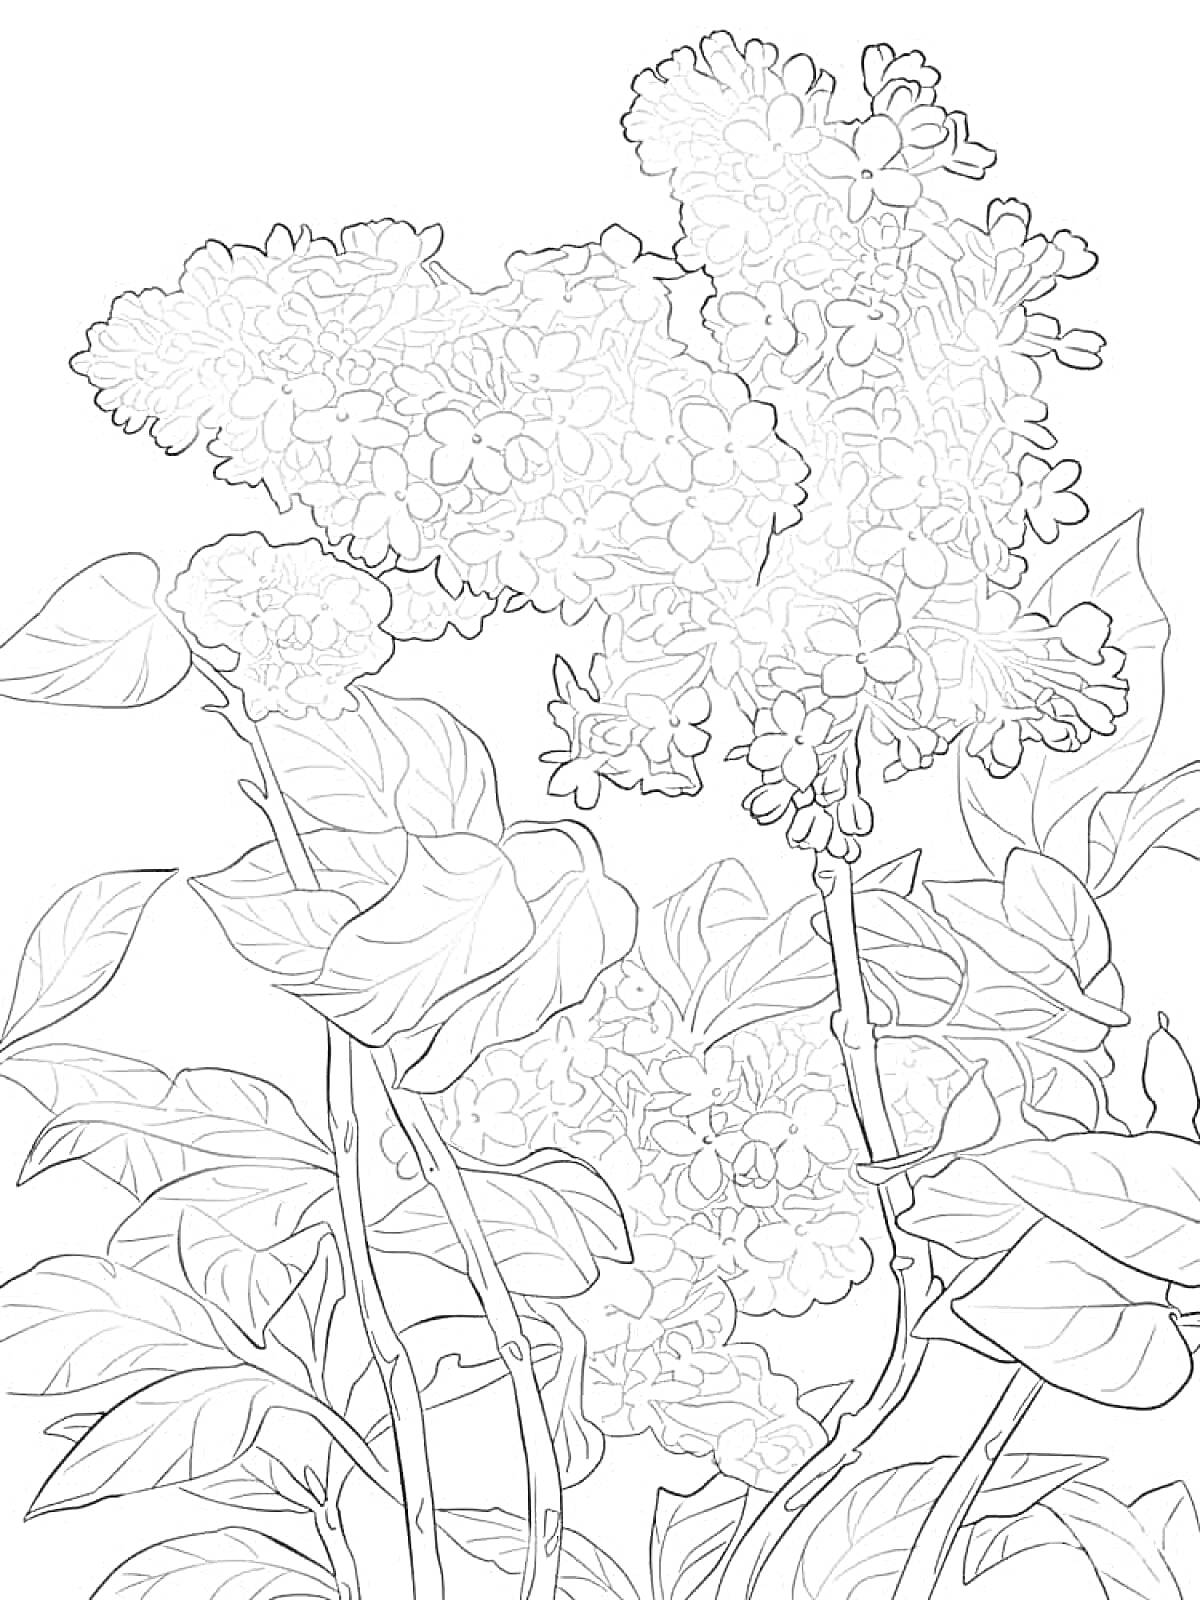 Раскраска Раскраска с изображением веток сирени с цветами и листьями